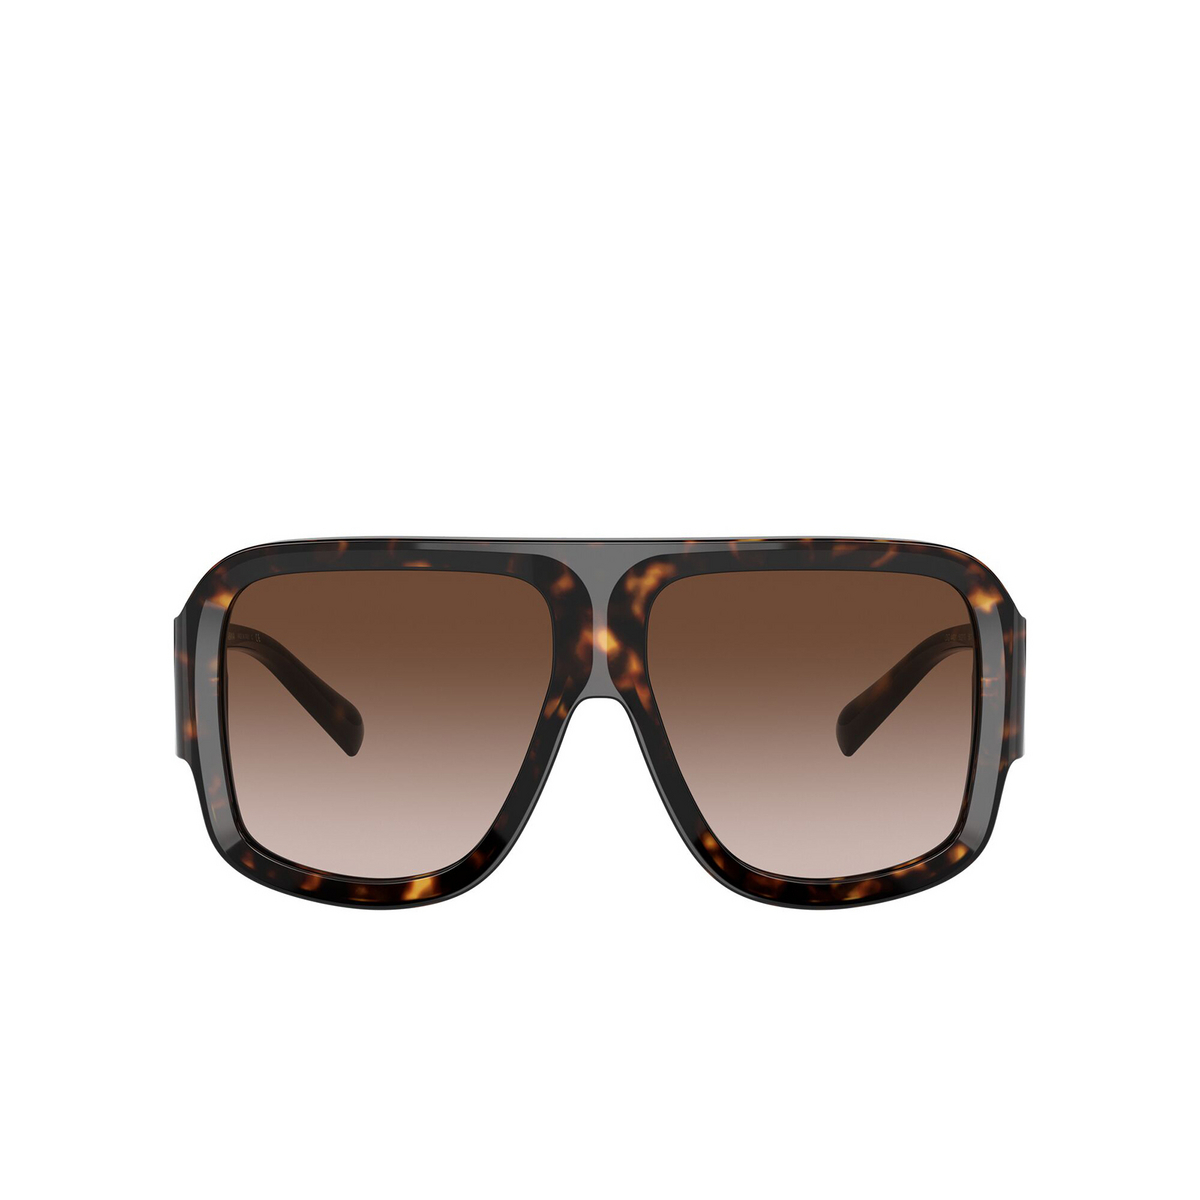 Dolce & Gabbana® Aviator Sunglasses: DG4401 color Havana 502/13 - front view.